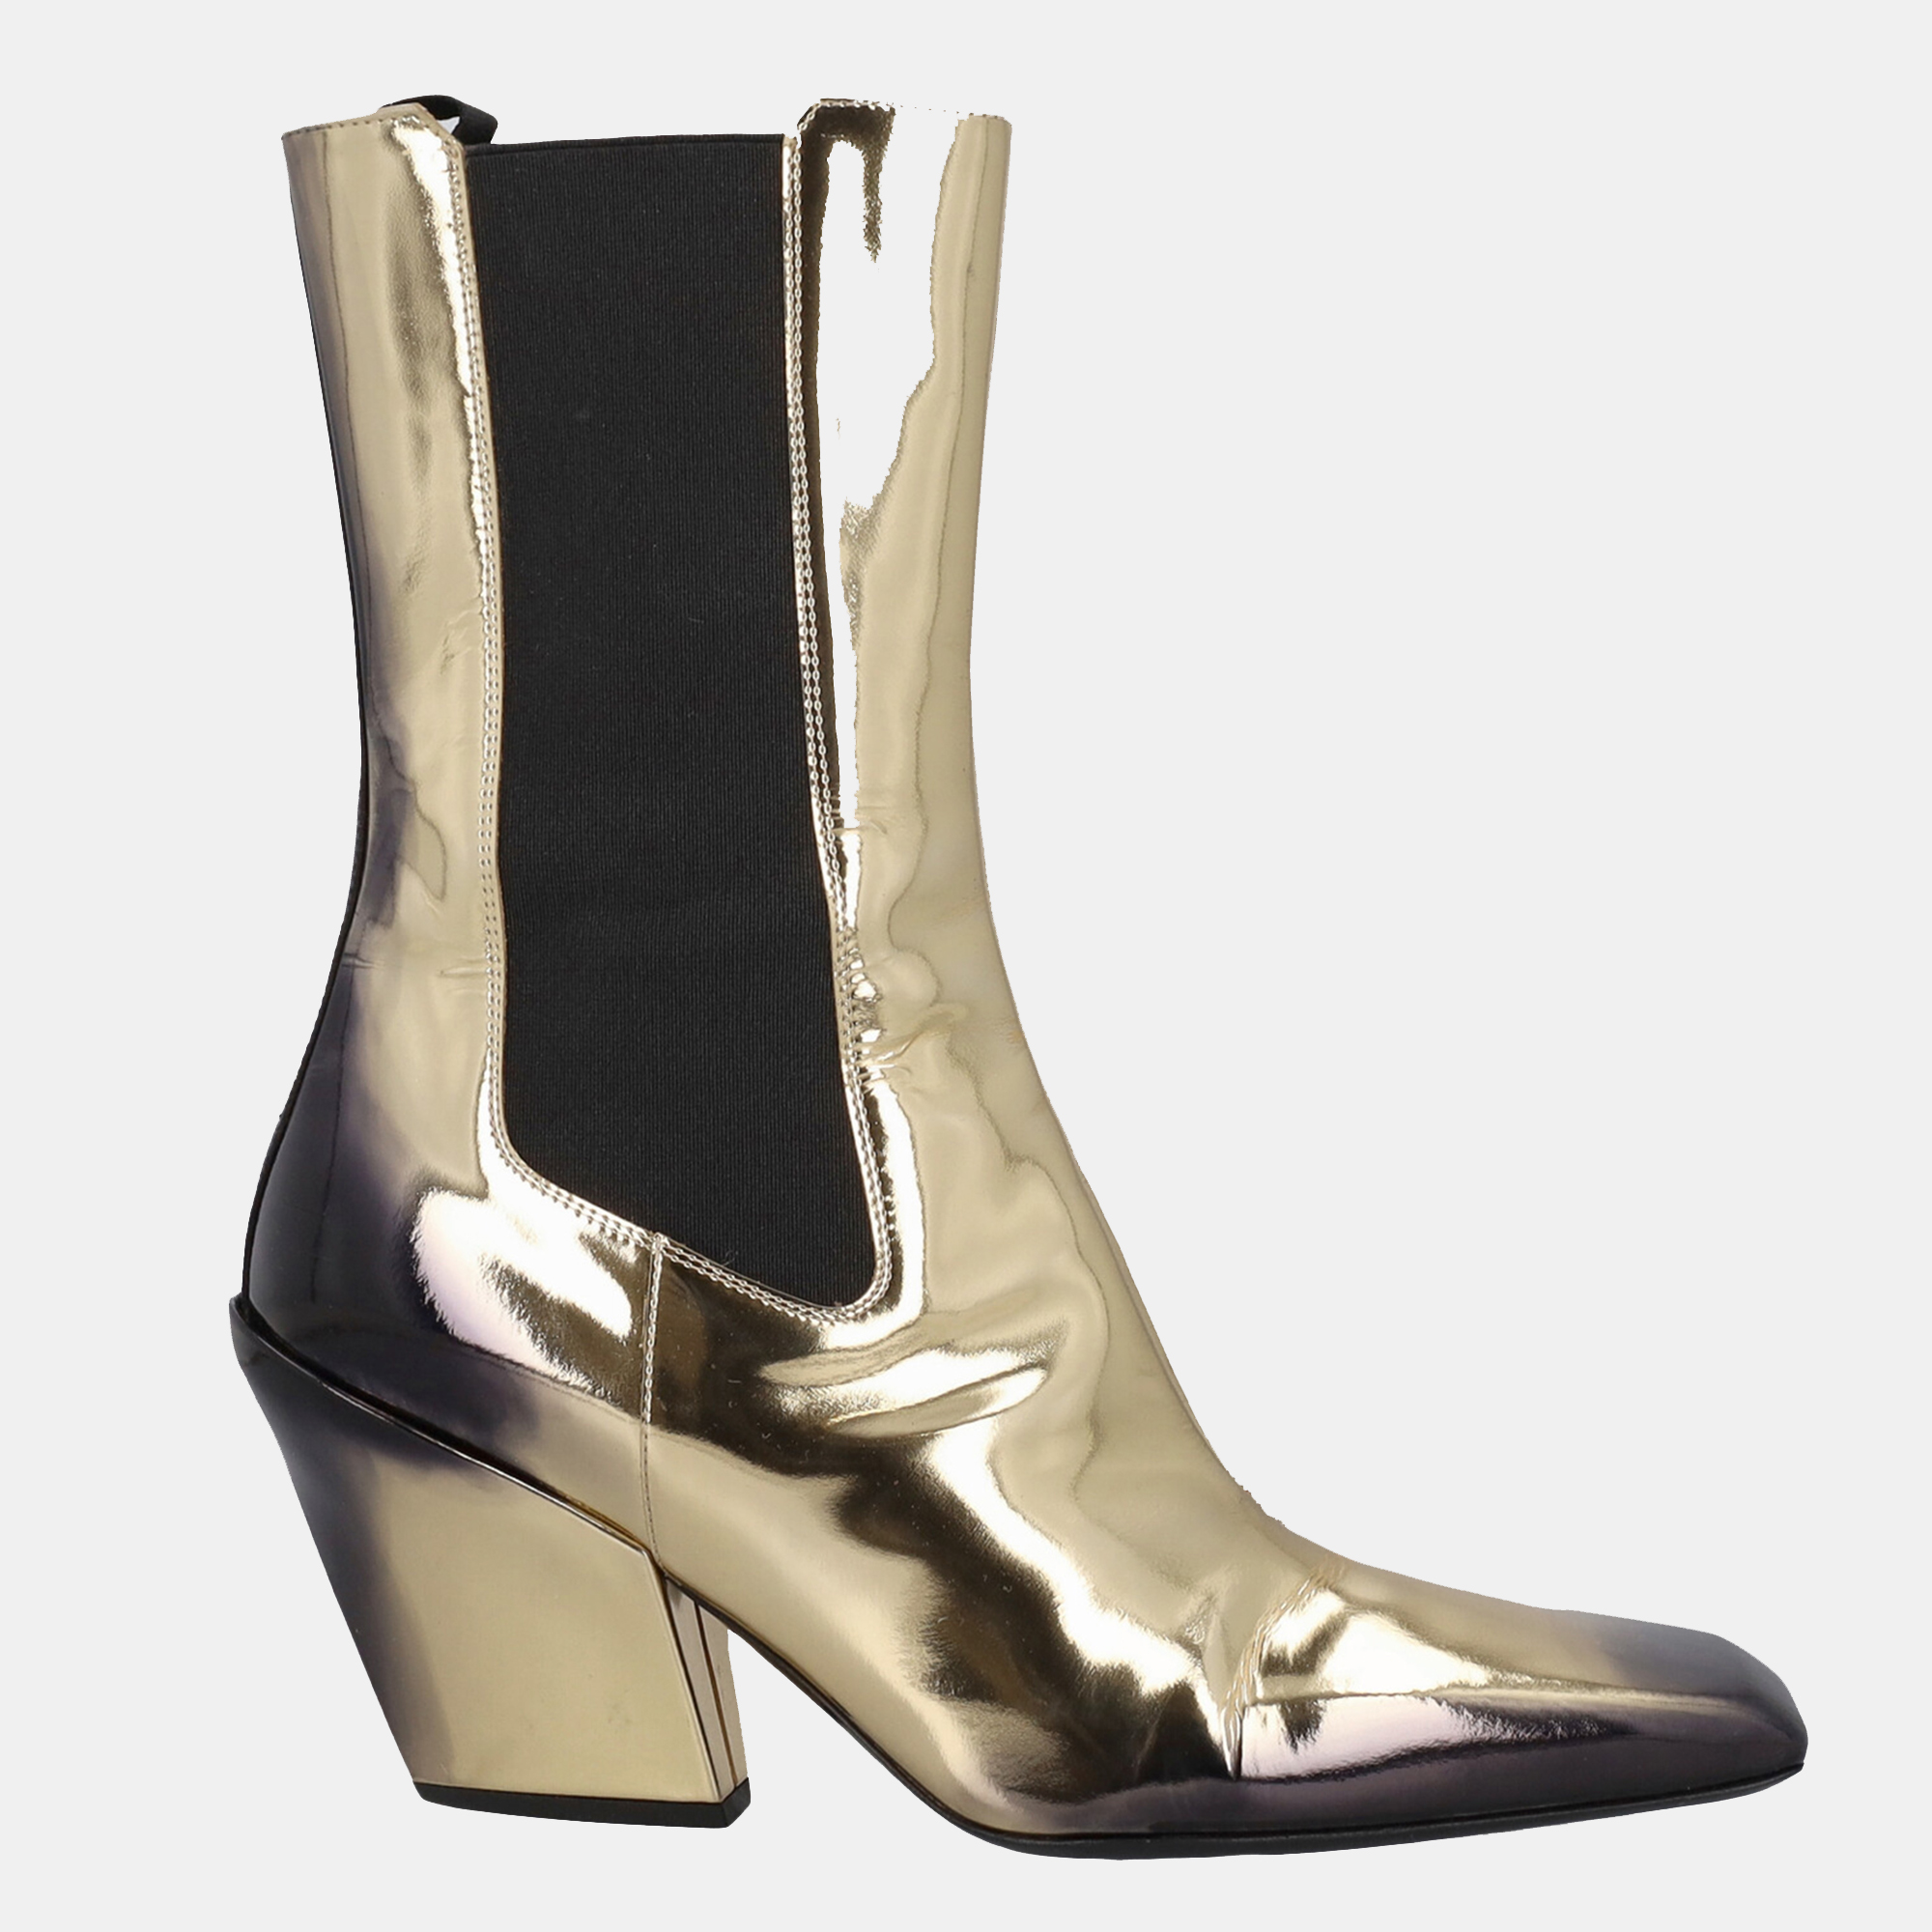 Prada  Women's Leather Ankle Boots - Black - EU 37.5